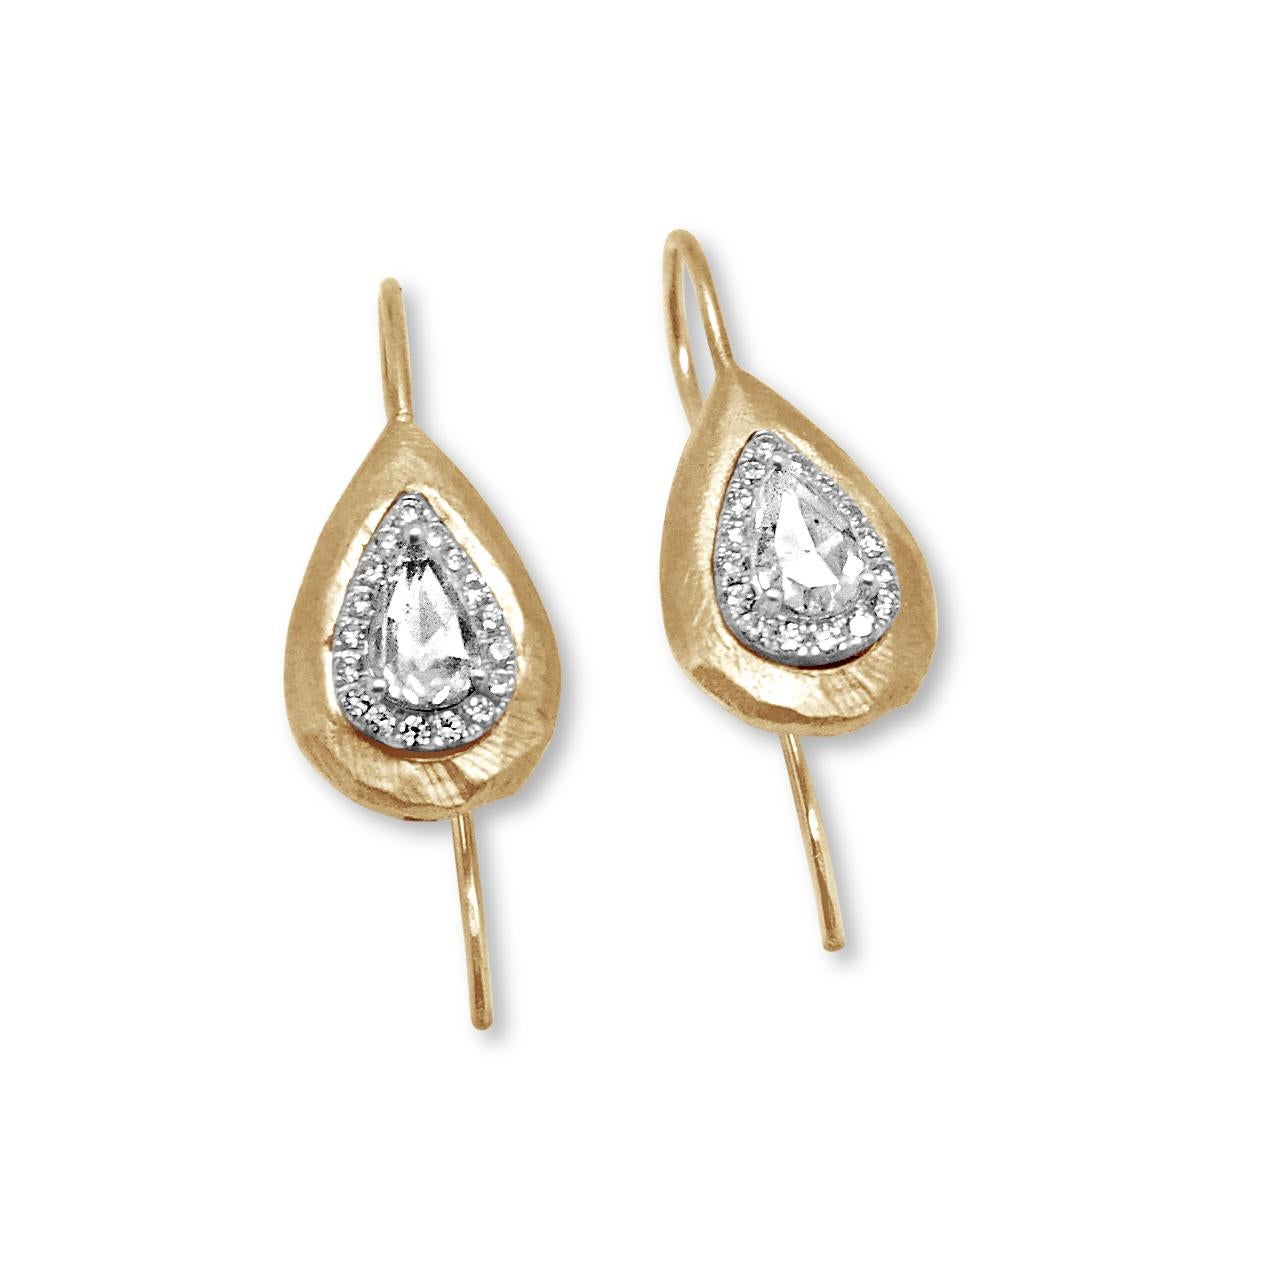 Pear Cut 18 Karat Gold and Diamond Earrings with 1 Carat Diamonds